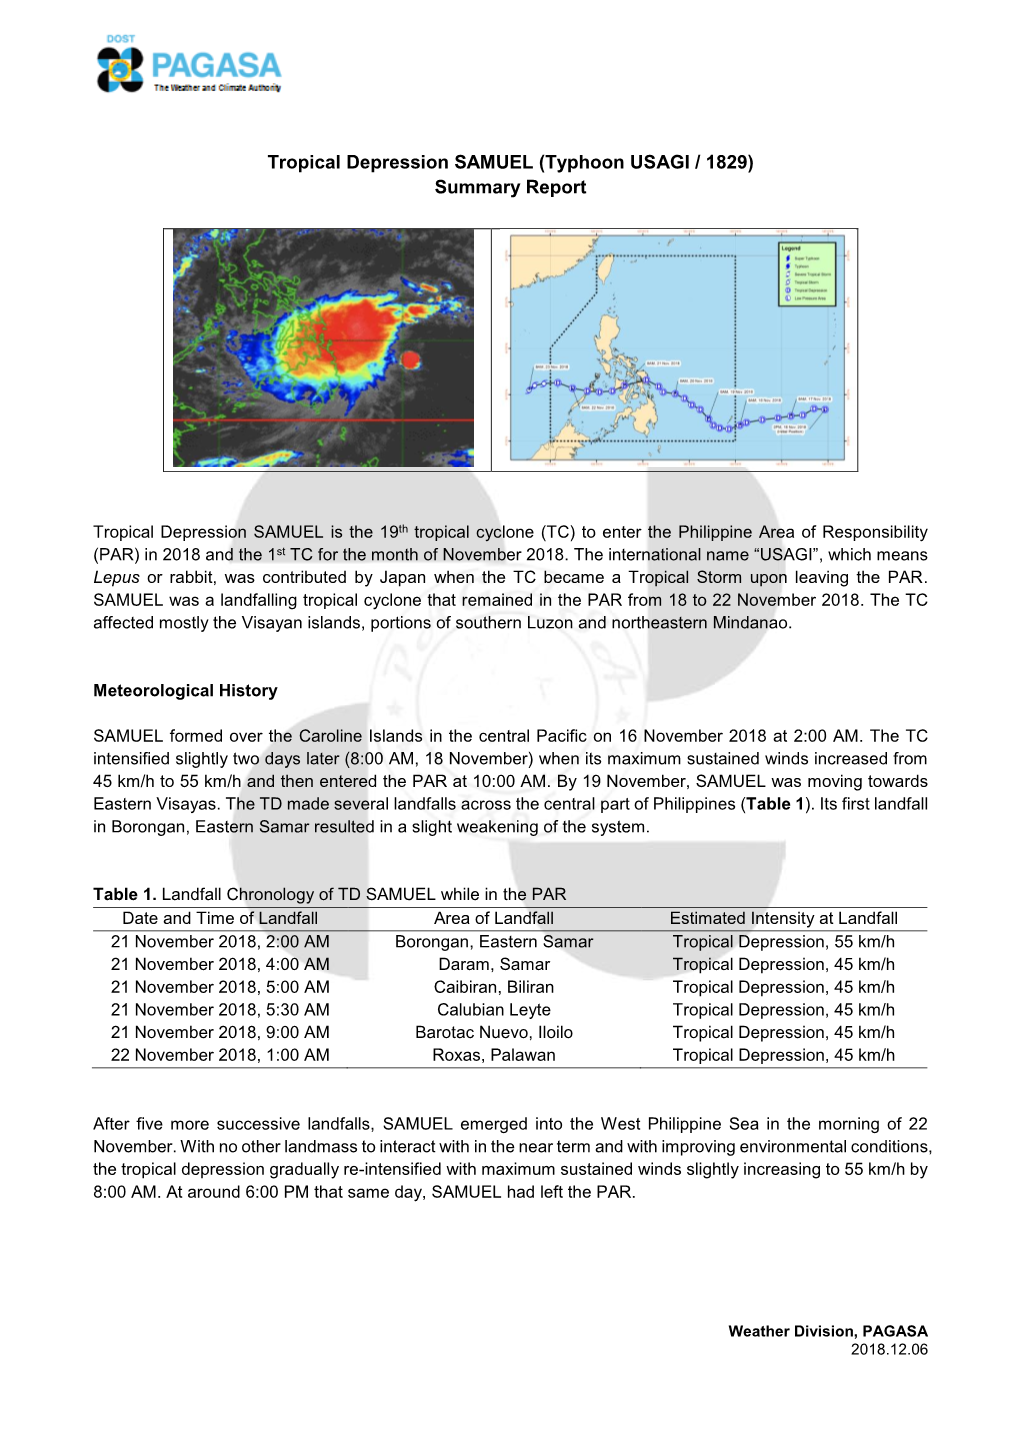 Tropical Depression SAMUEL (Typhoon USAGI / 1829) Summary Report